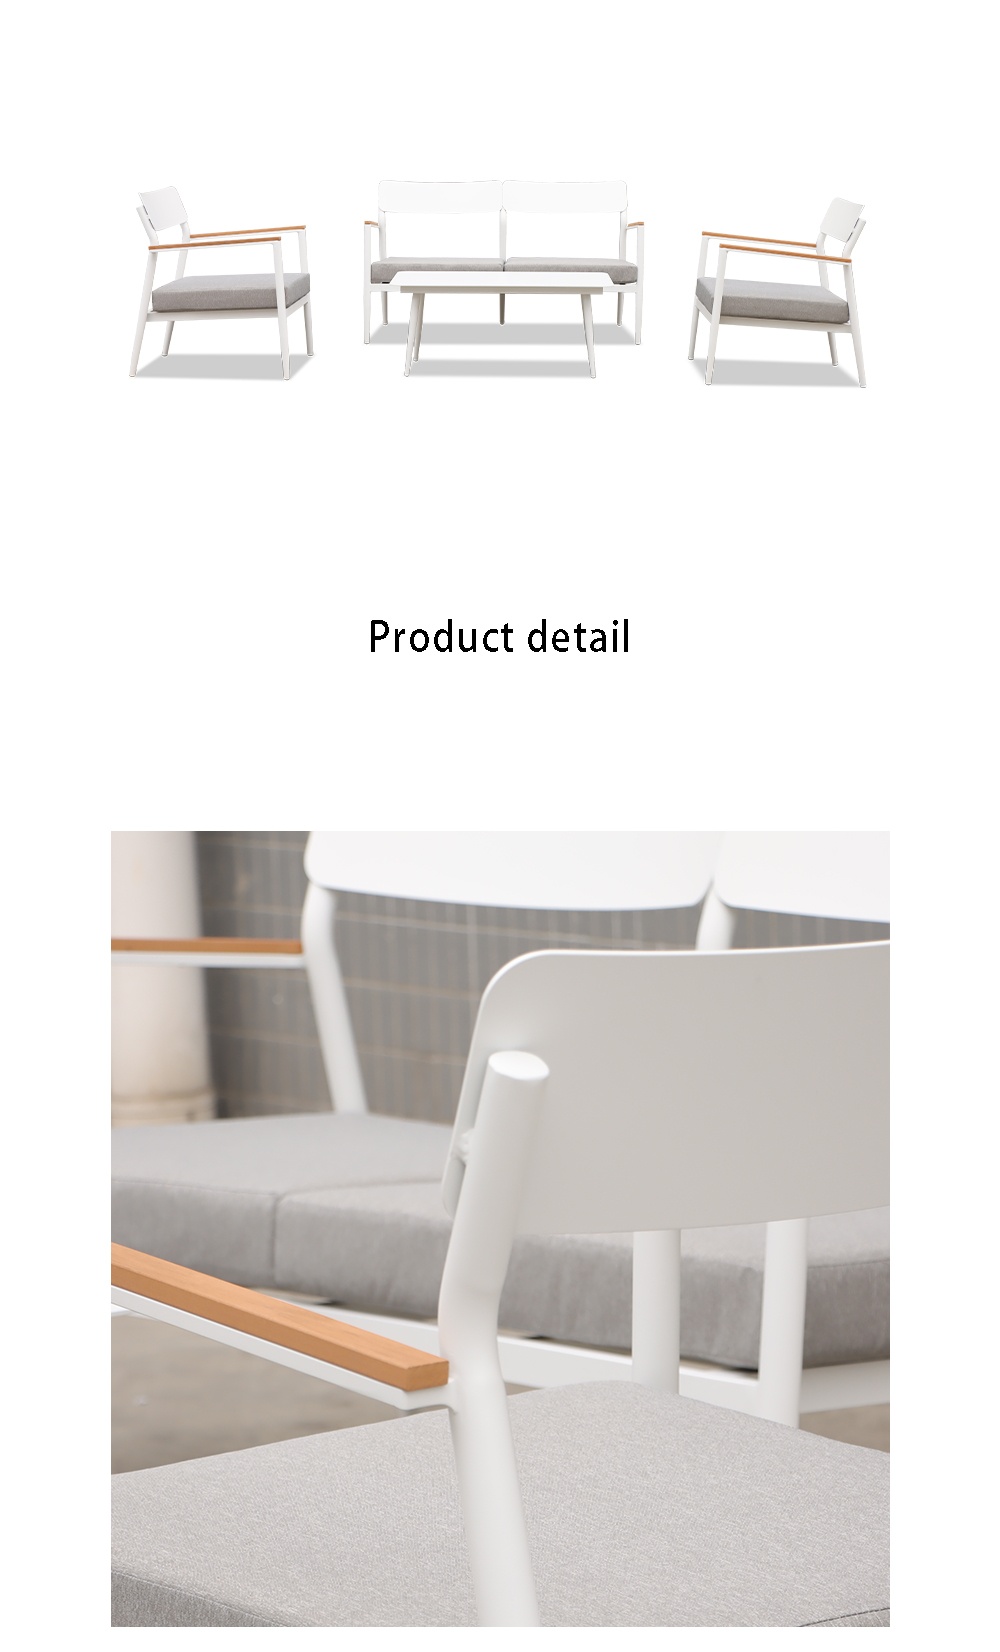 China outdoor furniture manufacturer